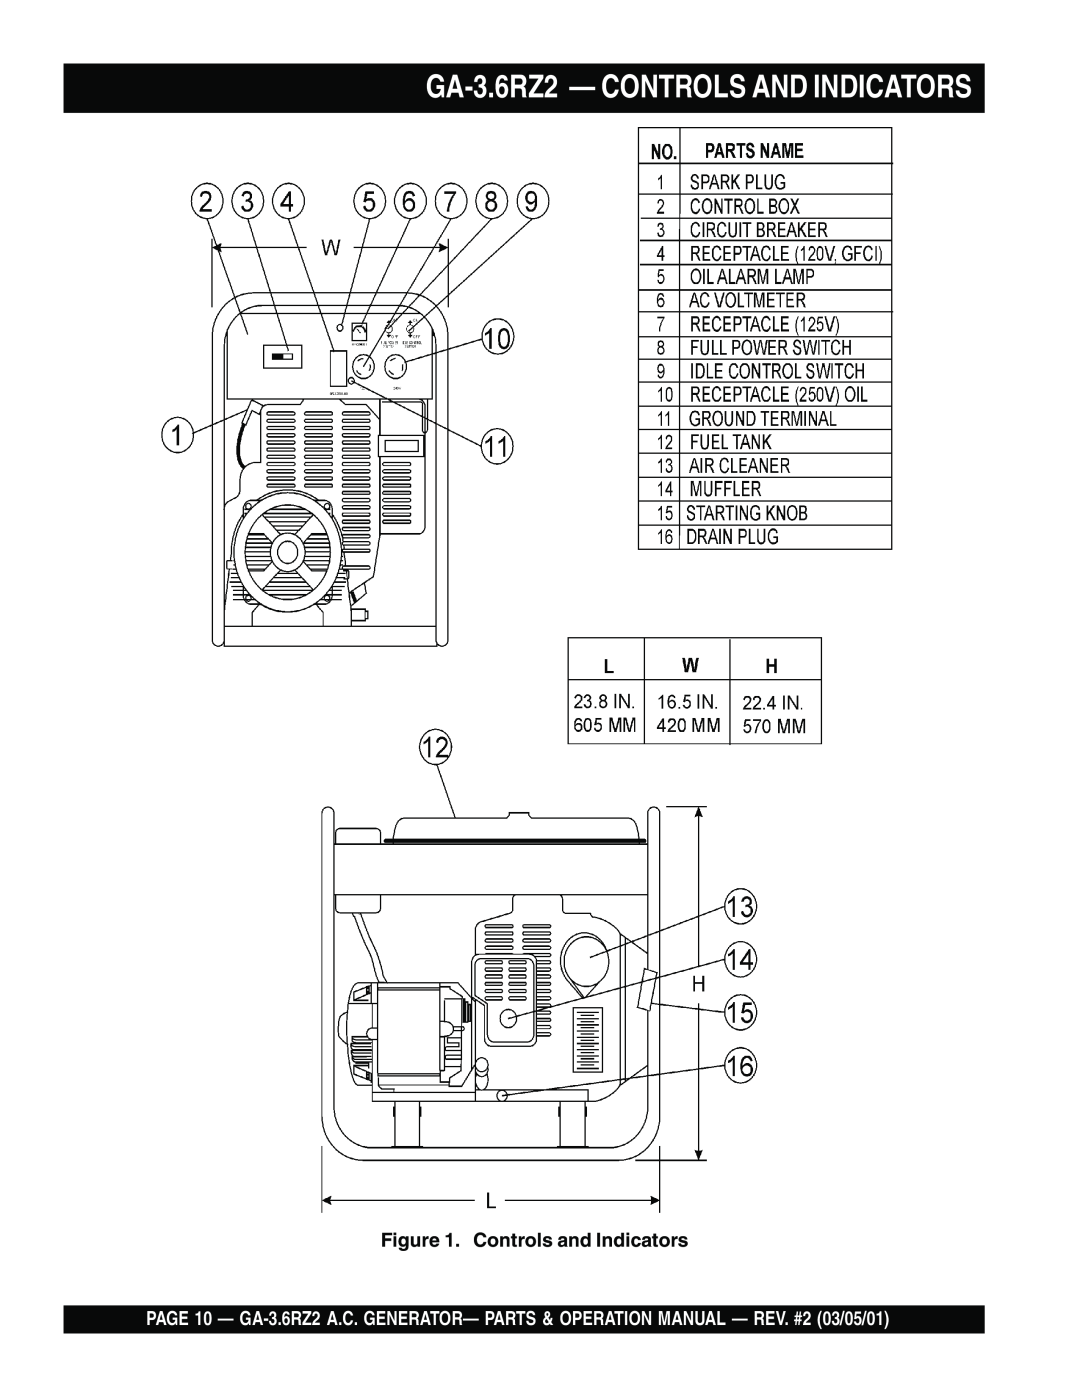 Multiquip operation manual GA-3.6RZ2— CONTROLS AND INDICATORS, Controls and Indicators 